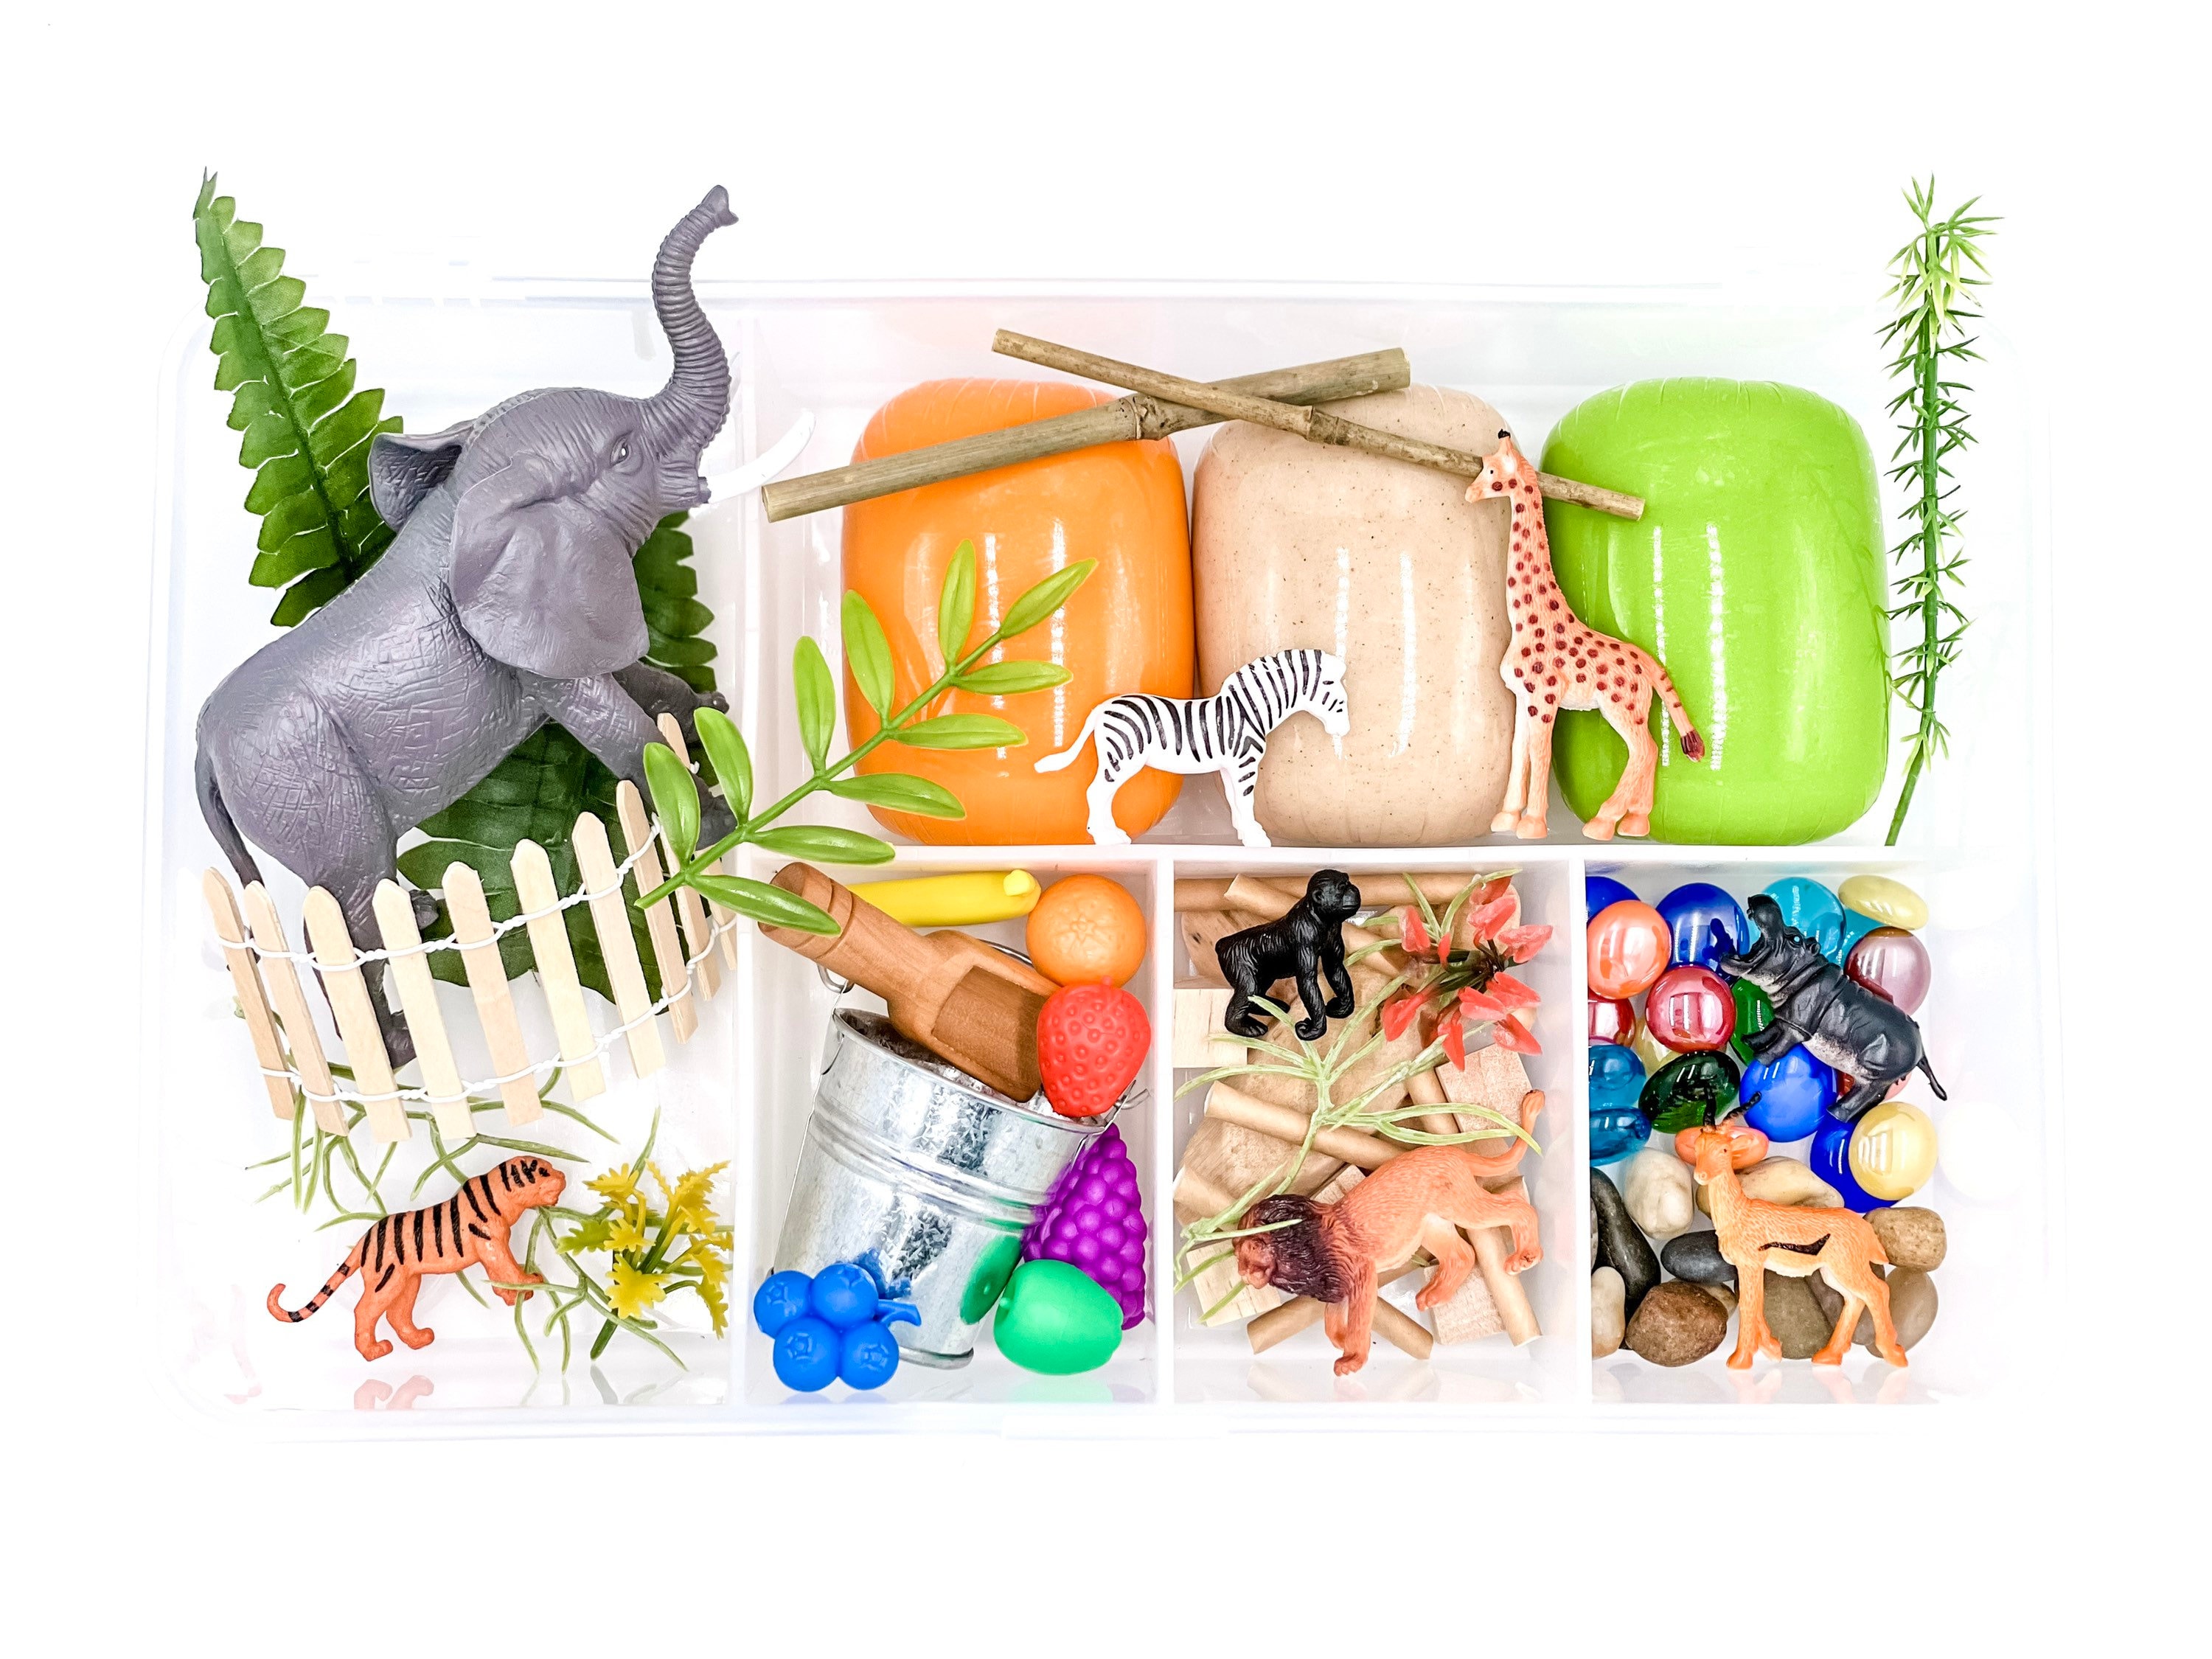 Play Dough Tools Kit Playdough Toys with Animal India